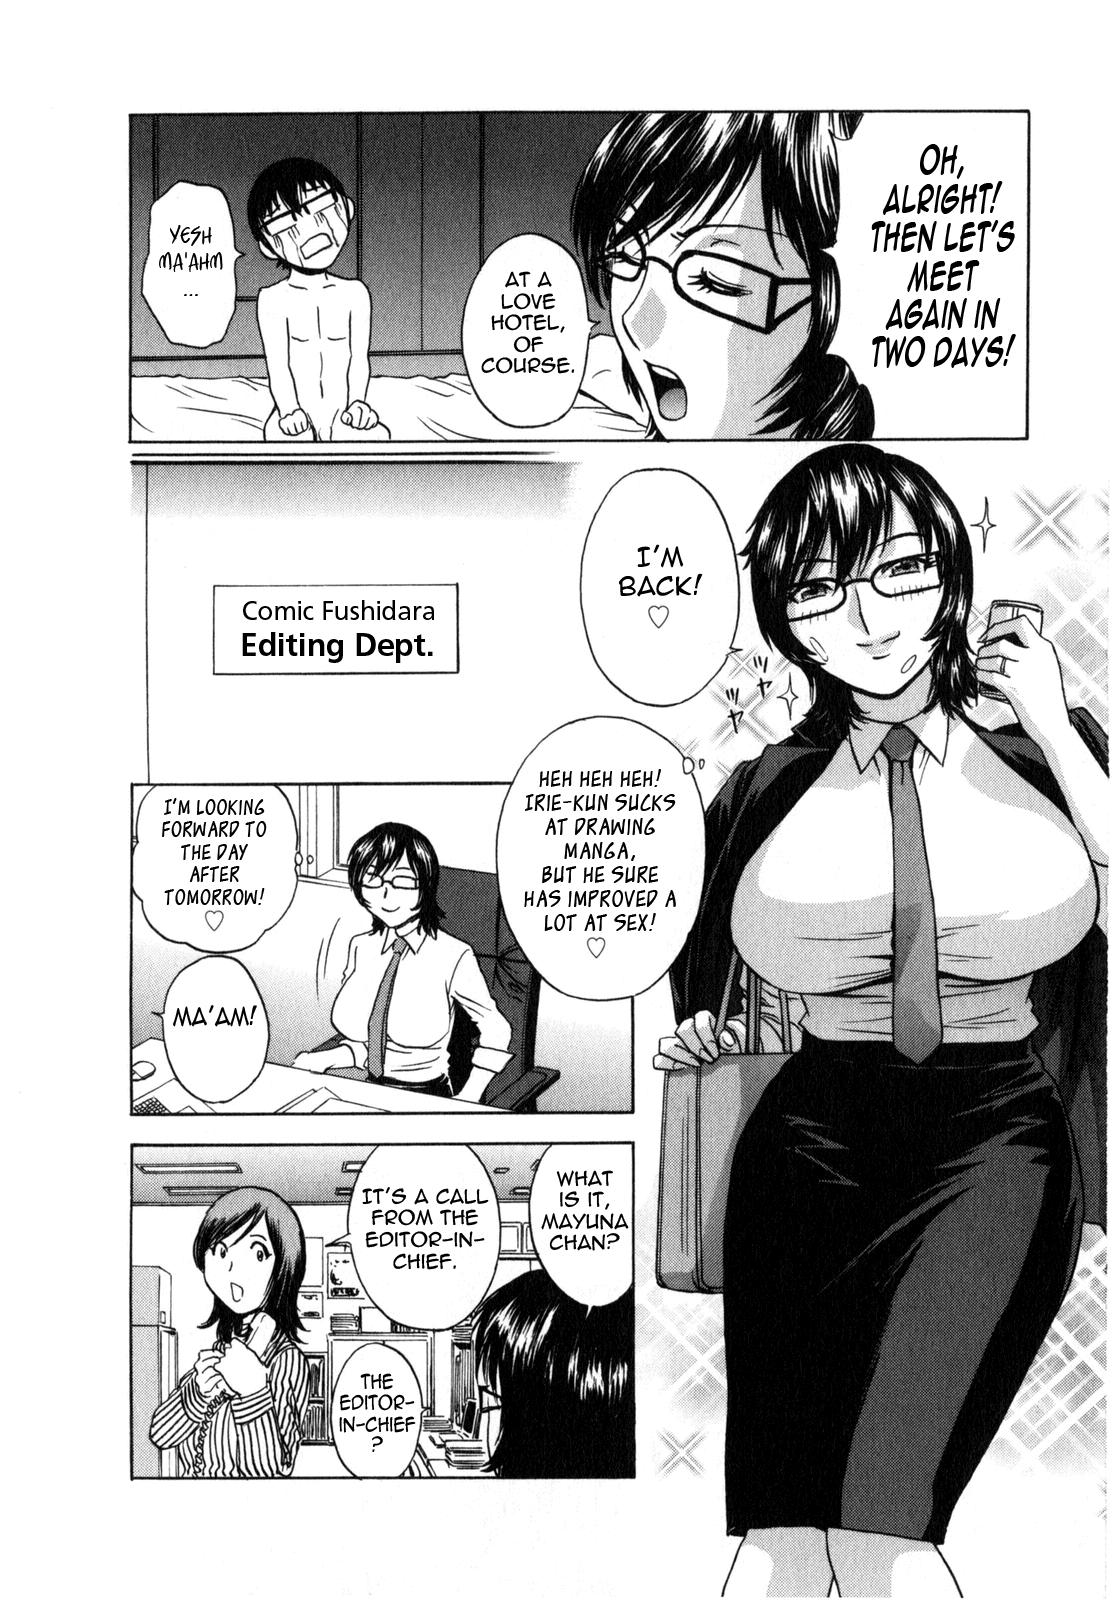 Life with Married Women Just Like a Manga 2 - Ch. 1 11